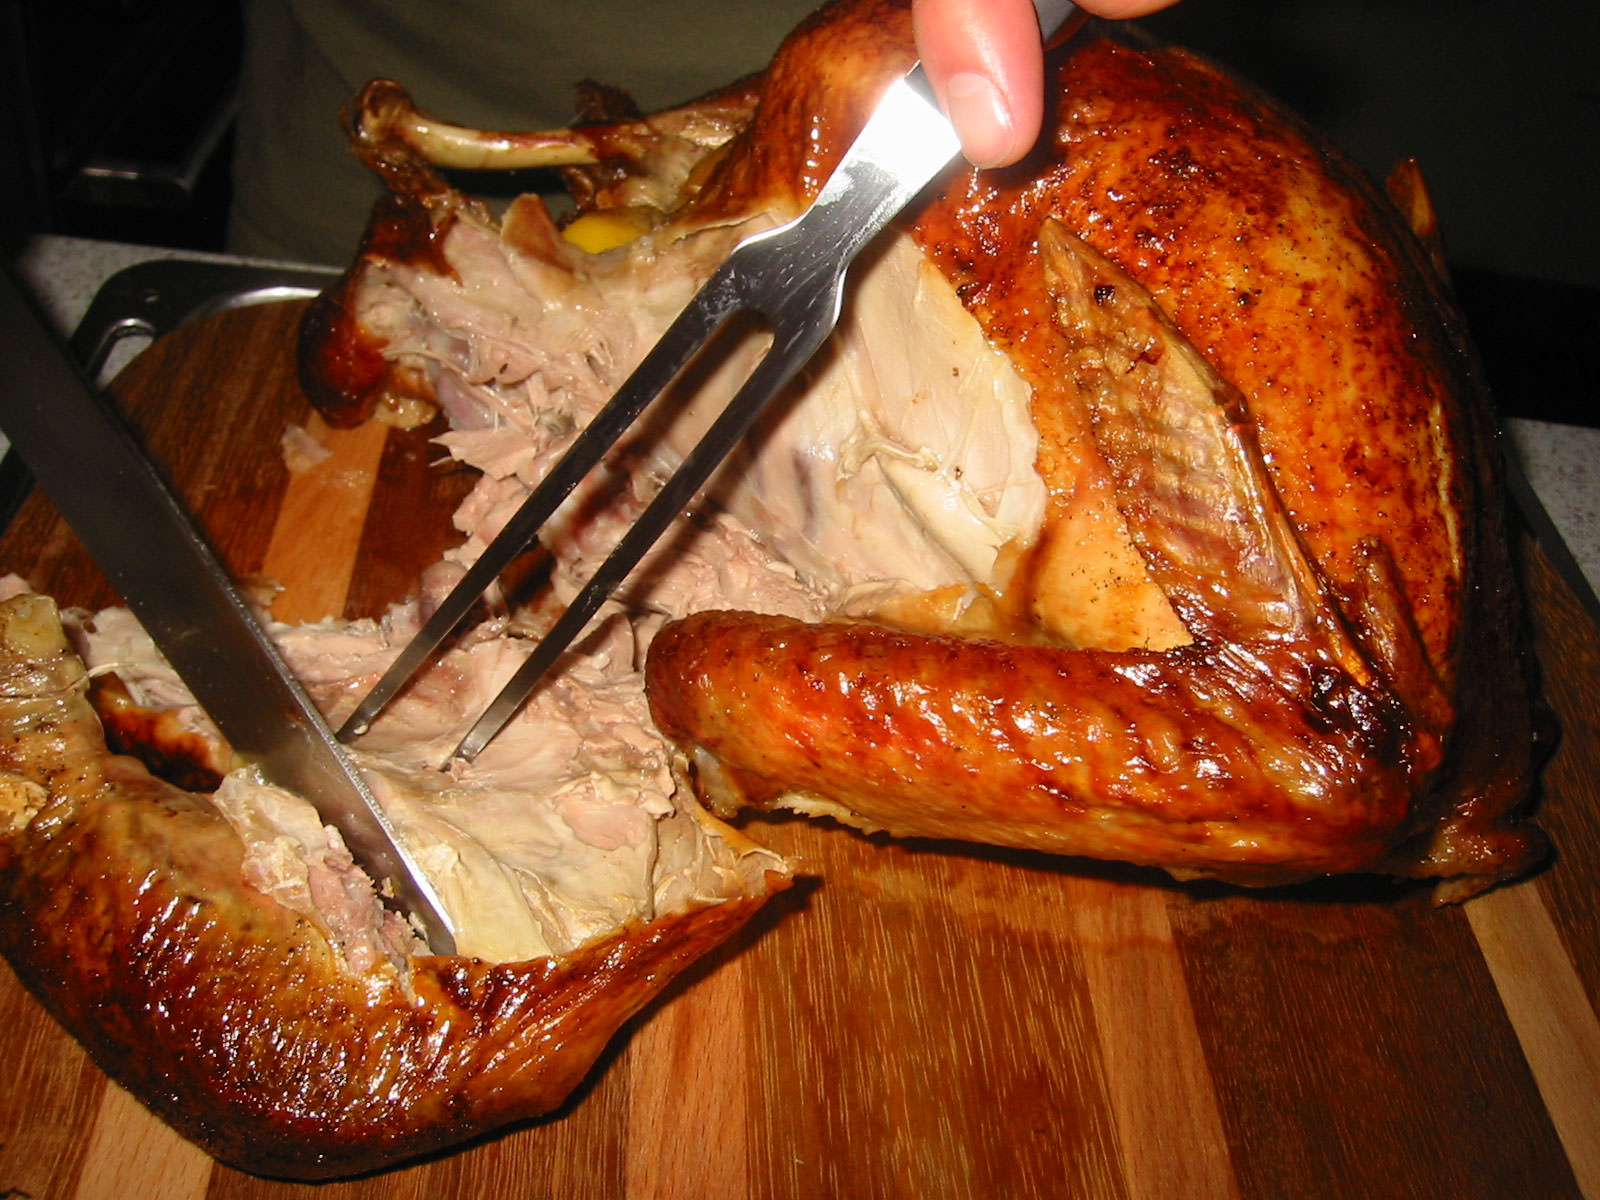 Turkey carving